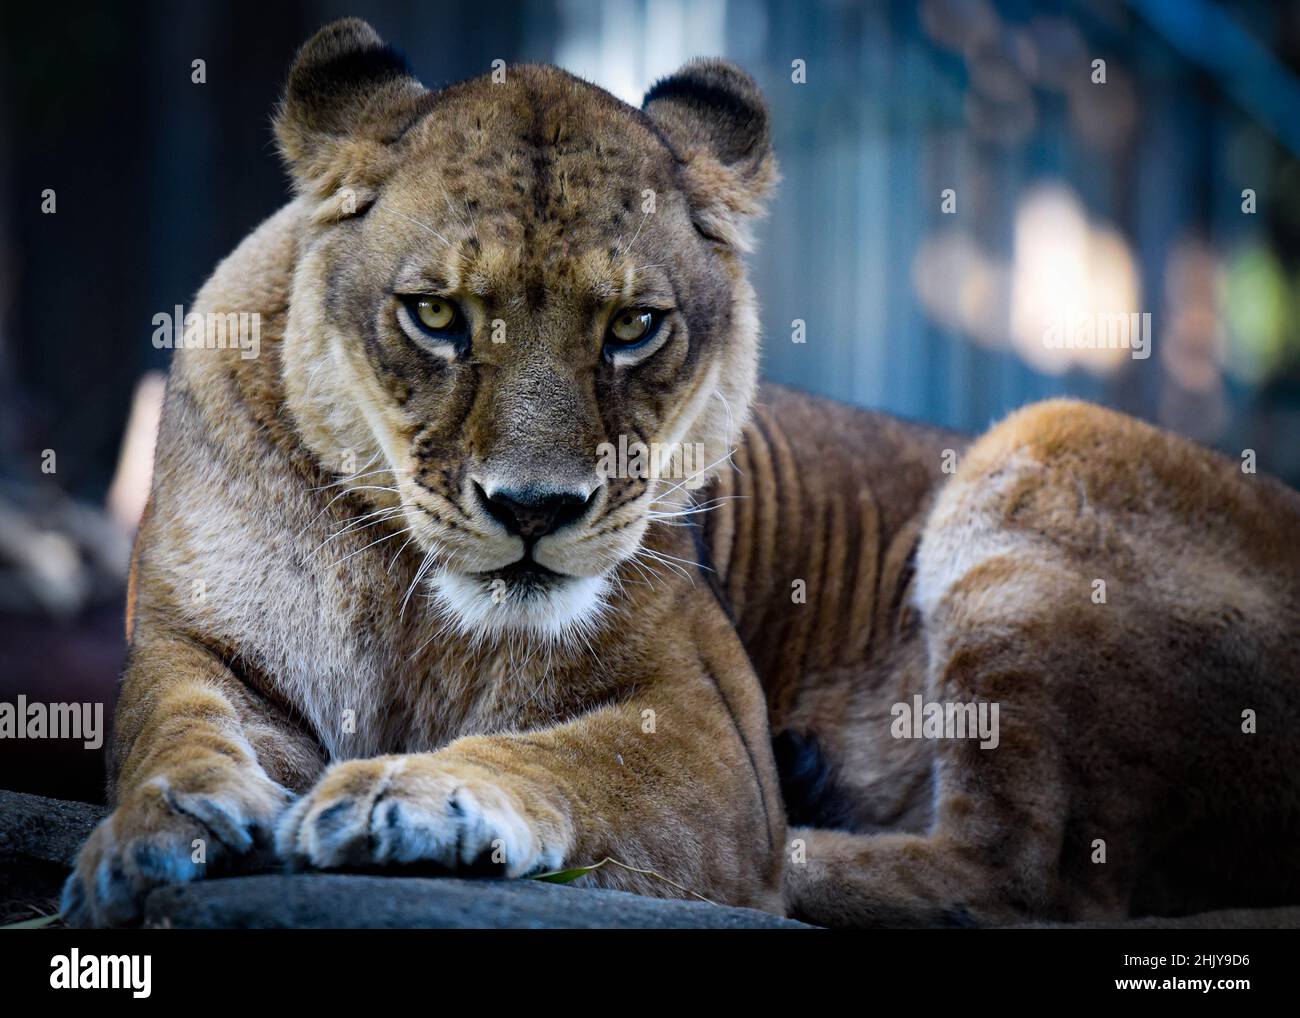 Retrato de la leona mirando y mirando la cámara. Foto de stock